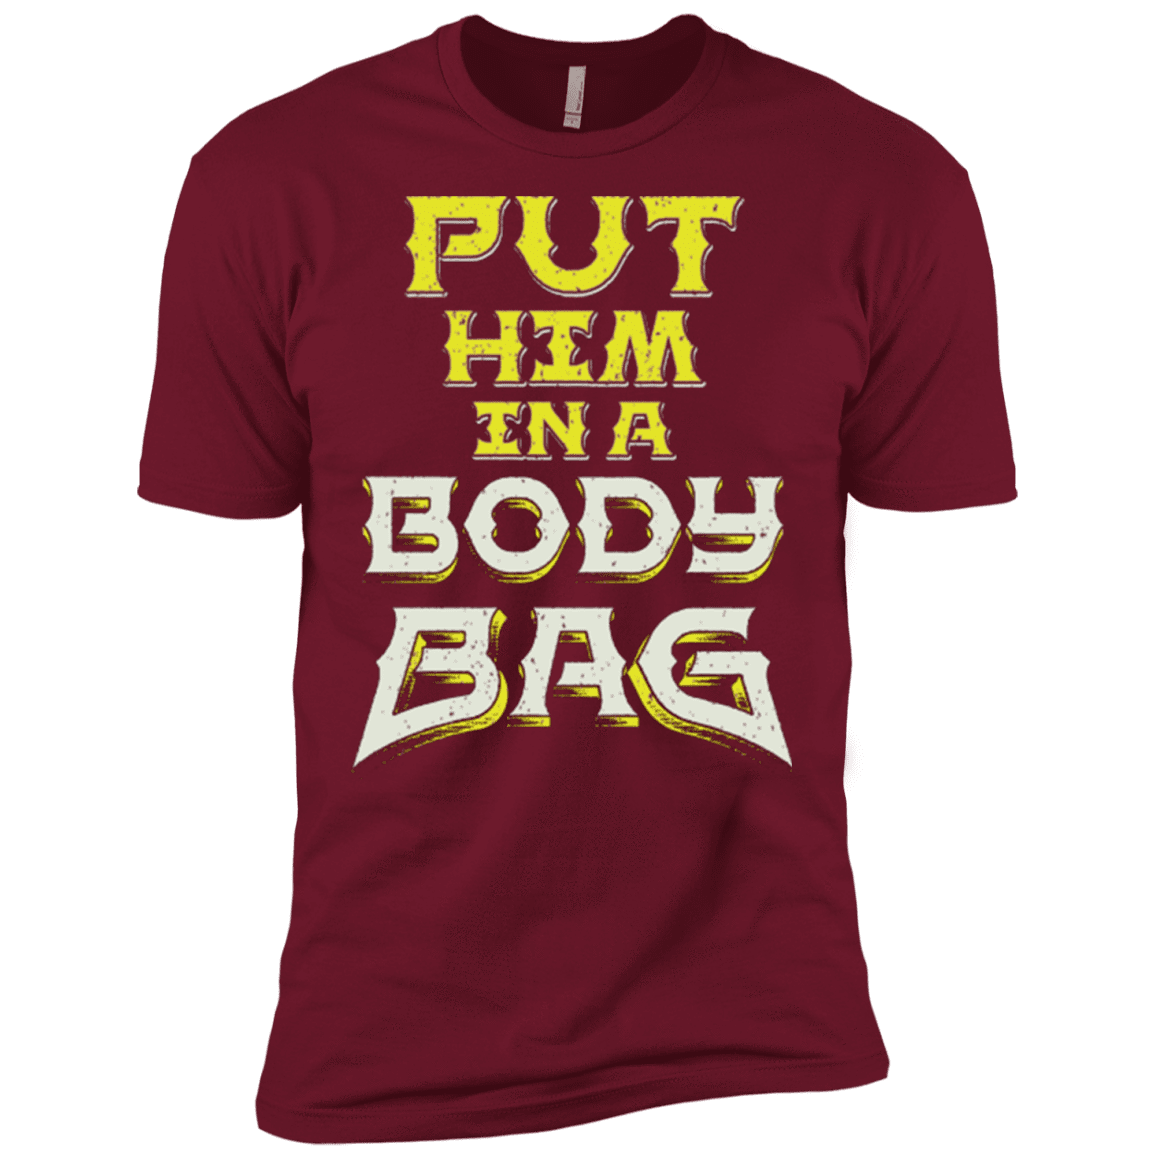 T-Shirts Cardinal / X-Small BODY BAG Men's Premium T-Shirt